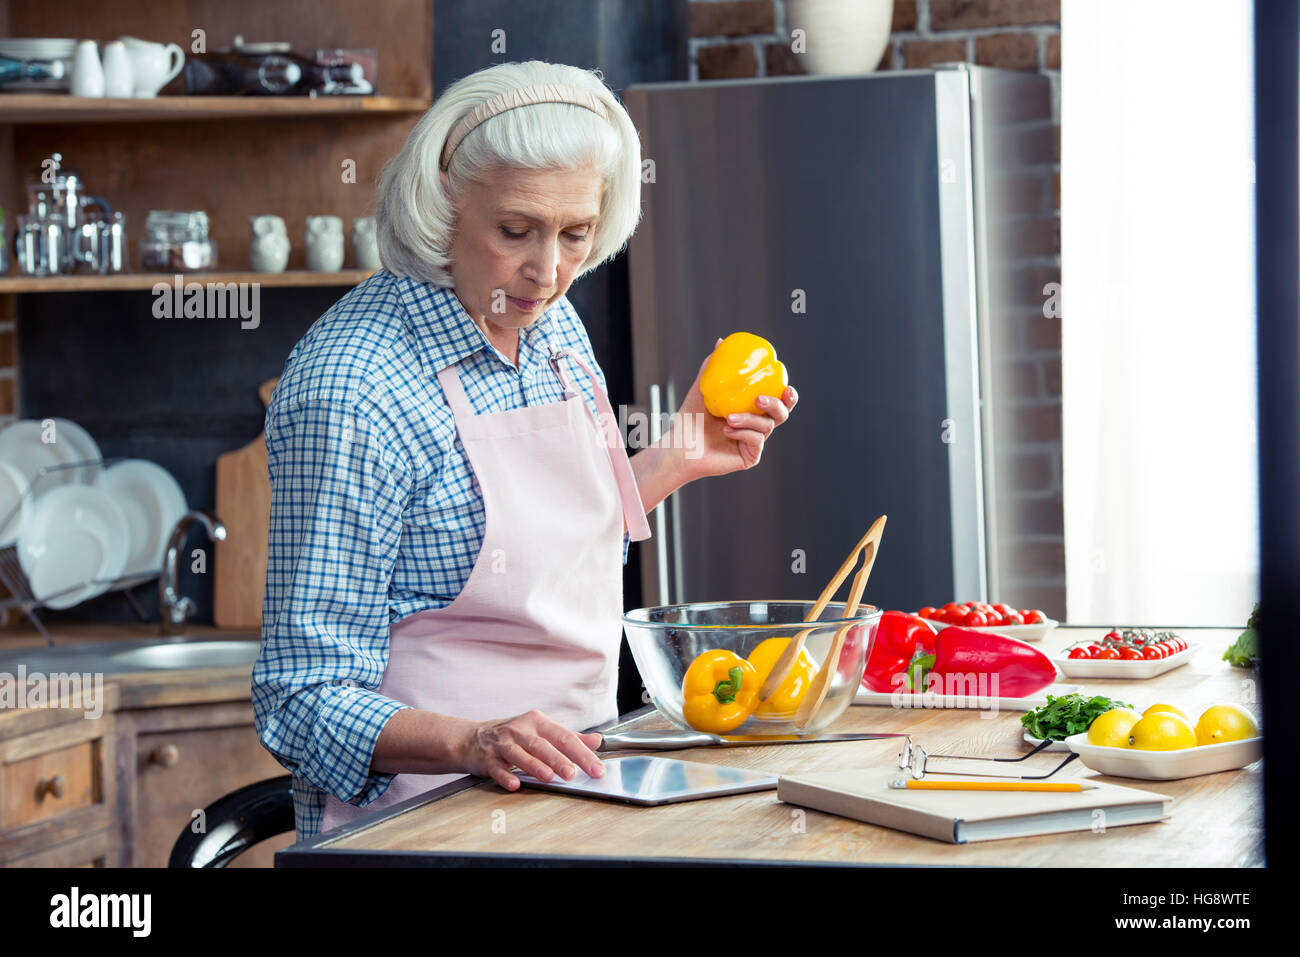 Senior woman using digital tablet in kitchen while preparing vegetable salad Stock Photo